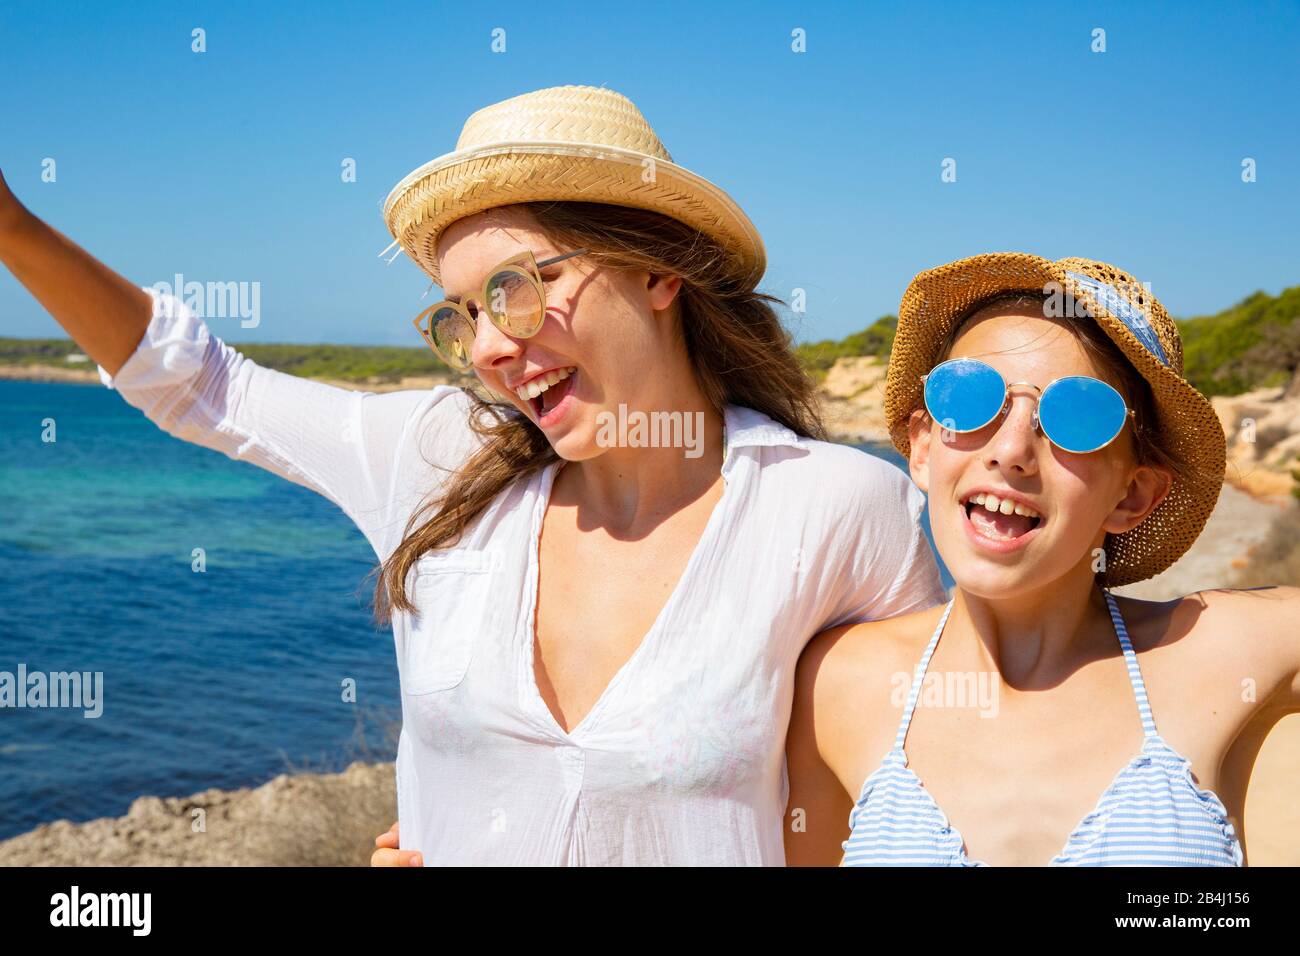 Girls In Bikini On Beach Fotos Und Bildmaterial In Hoher Auflösung Alamy 